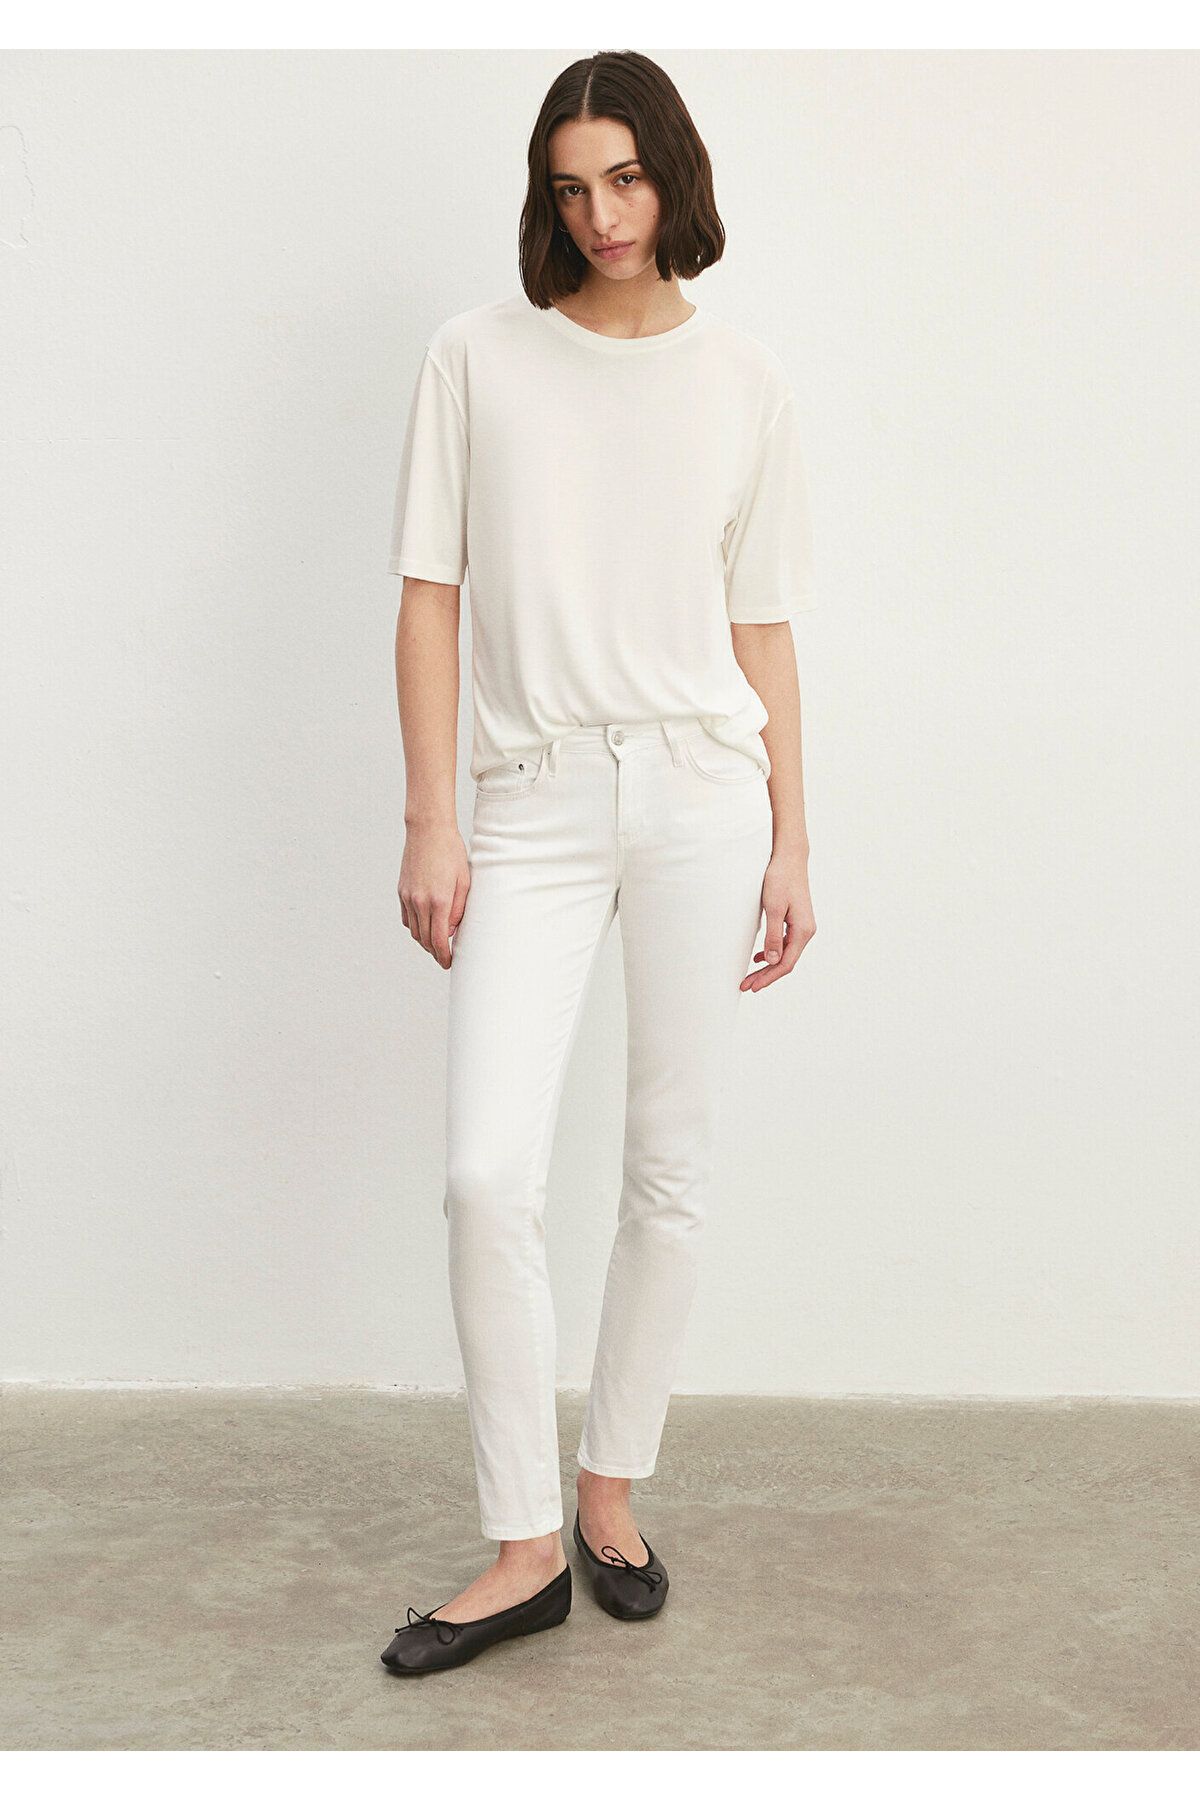 Mavi Ada Casual Vintage Beyaz Jean Pantolon 1020581363